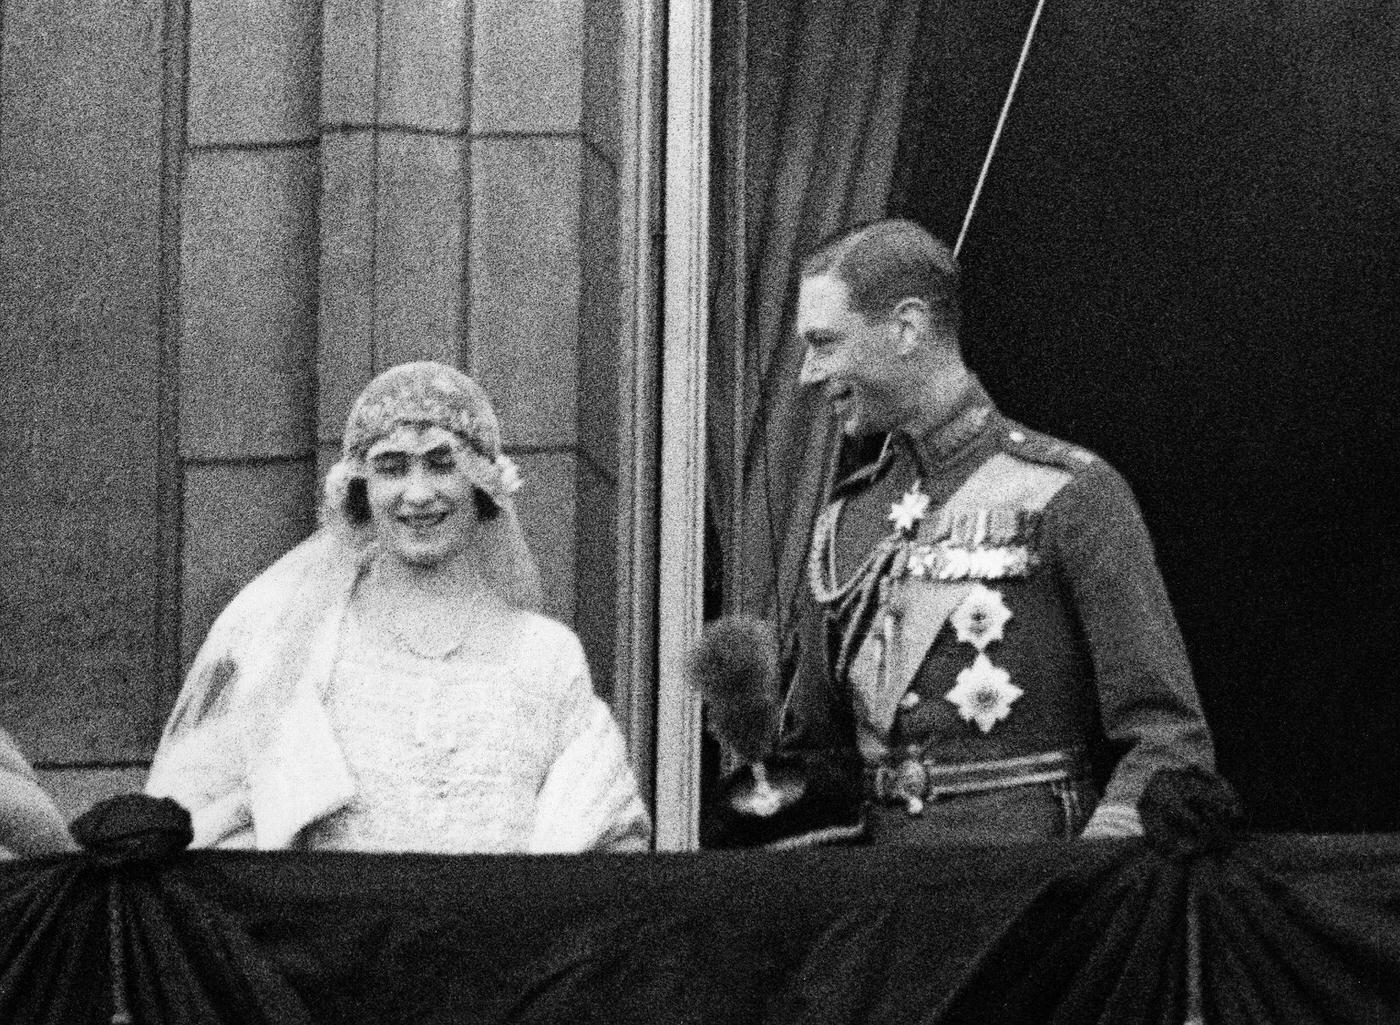 King of England at his wedding to Elizabeth Bowes-Lyon